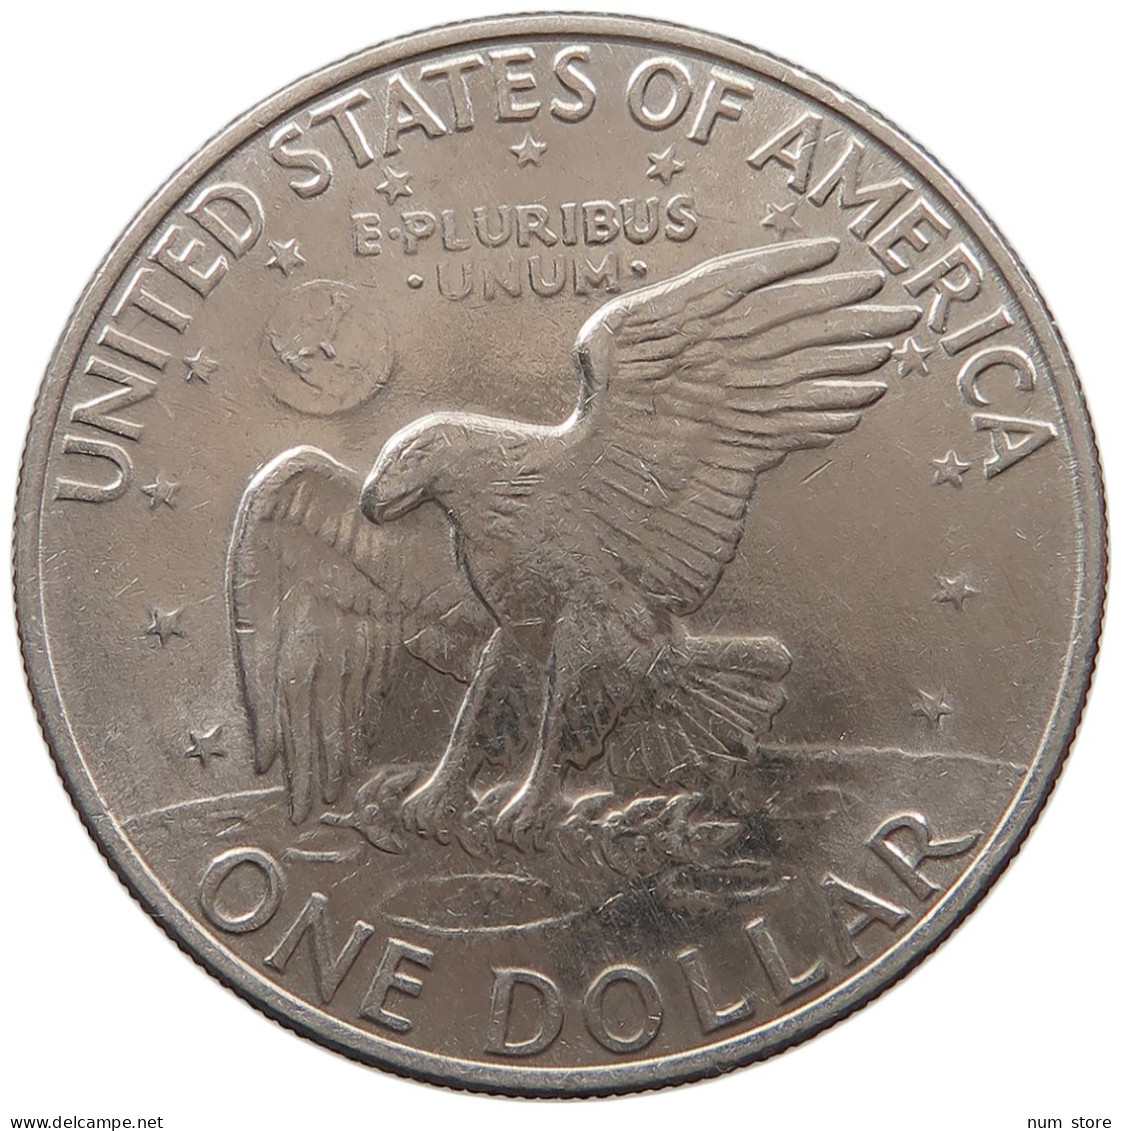 UNITED STATES OF AMERICA DOLLAR 1972 D EISENHOWER #alb065 0423 - 1971-1978: Eisenhower